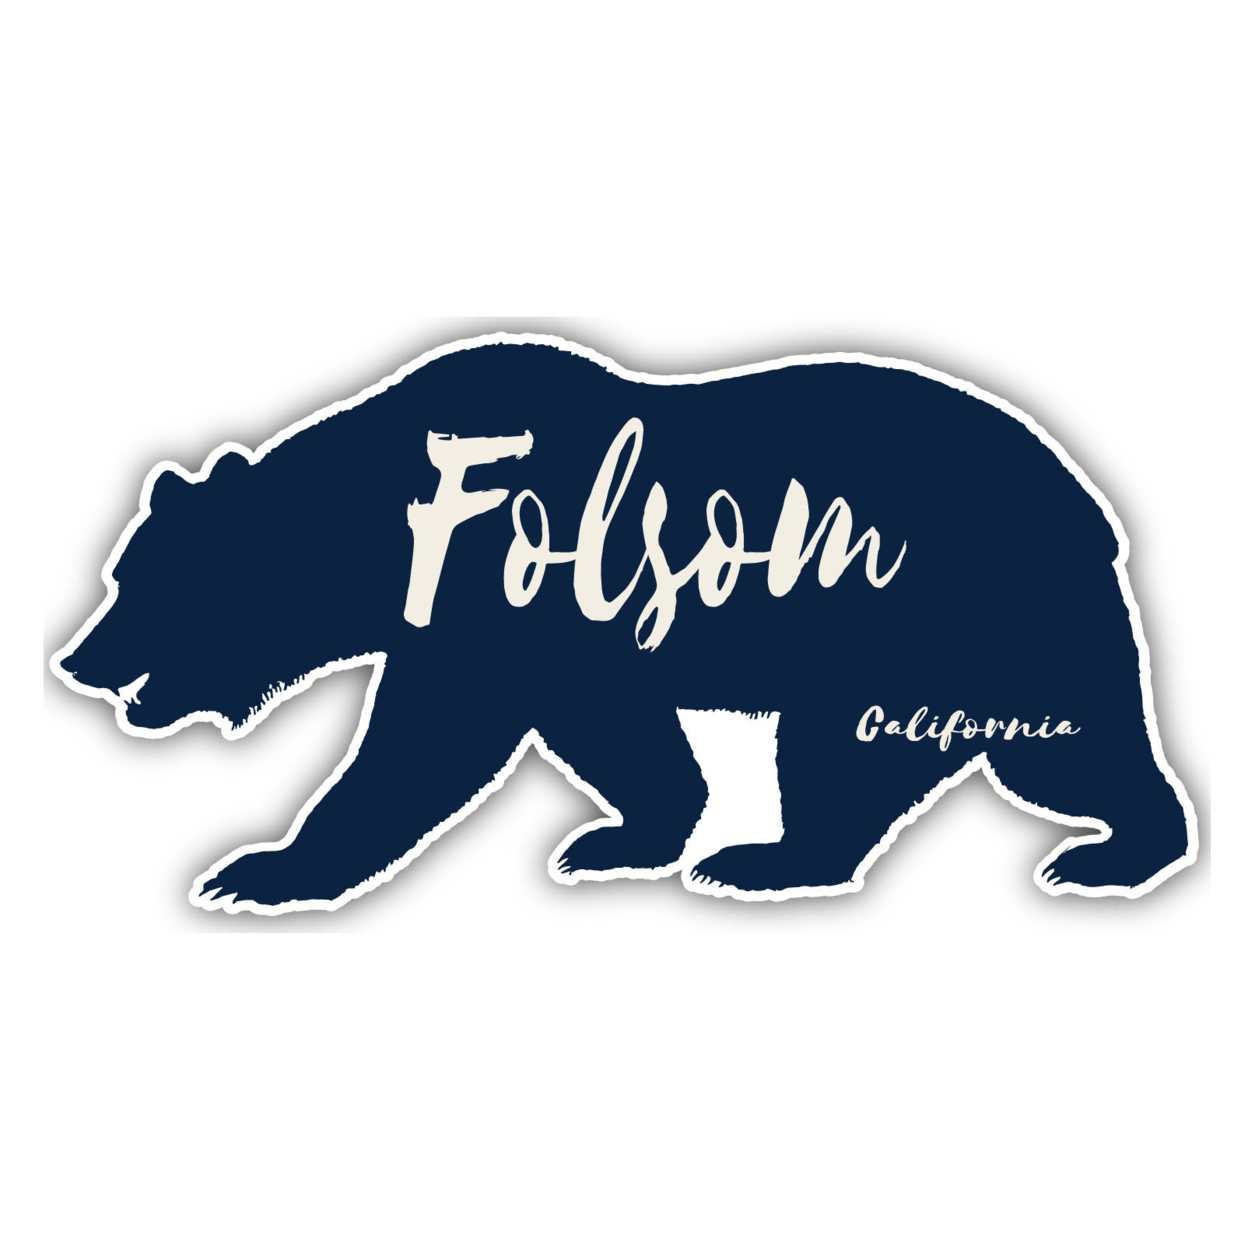 Folsom California Souvenir Decorative Stickers (Choose Theme And Size) - Single Unit, 10-Inch, Camp Life